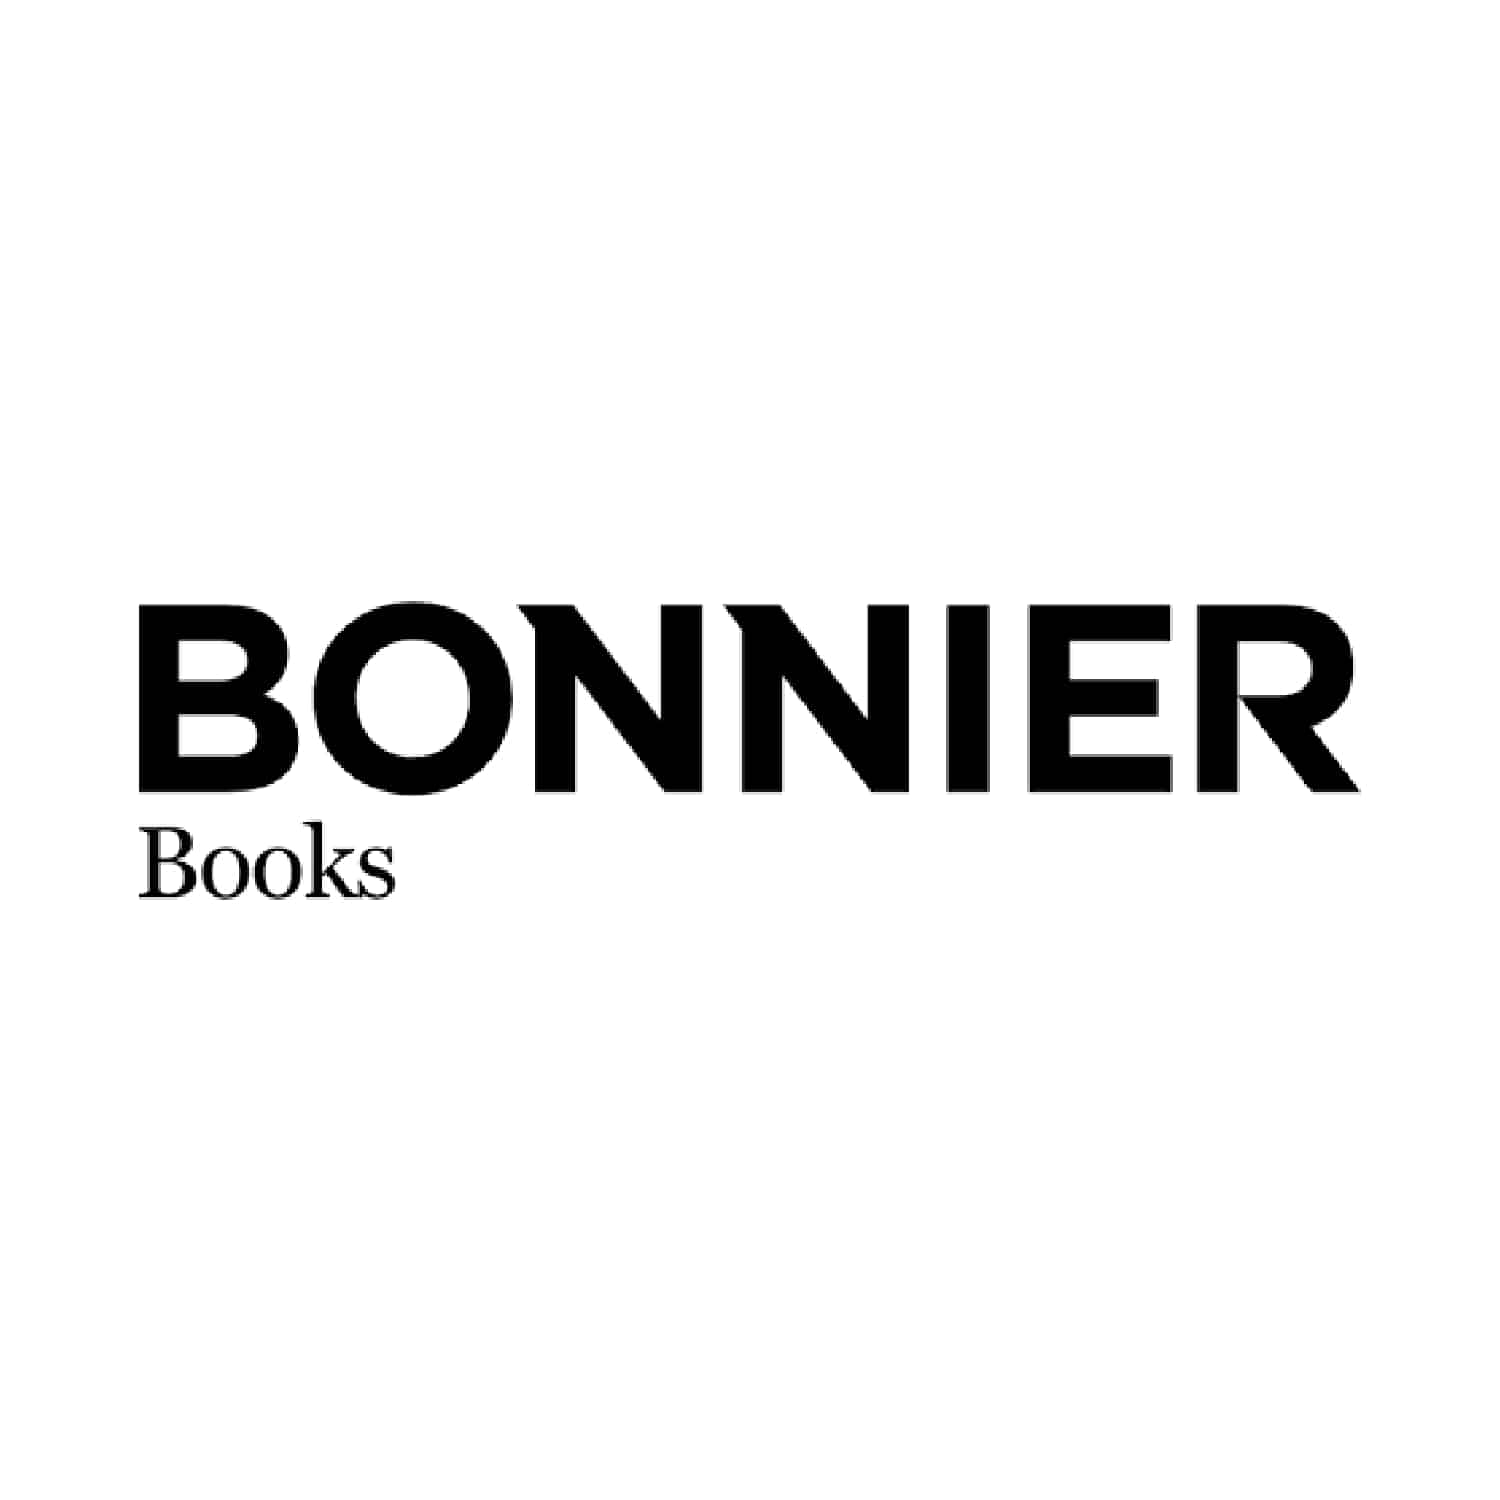 Bonnier Books Ltd